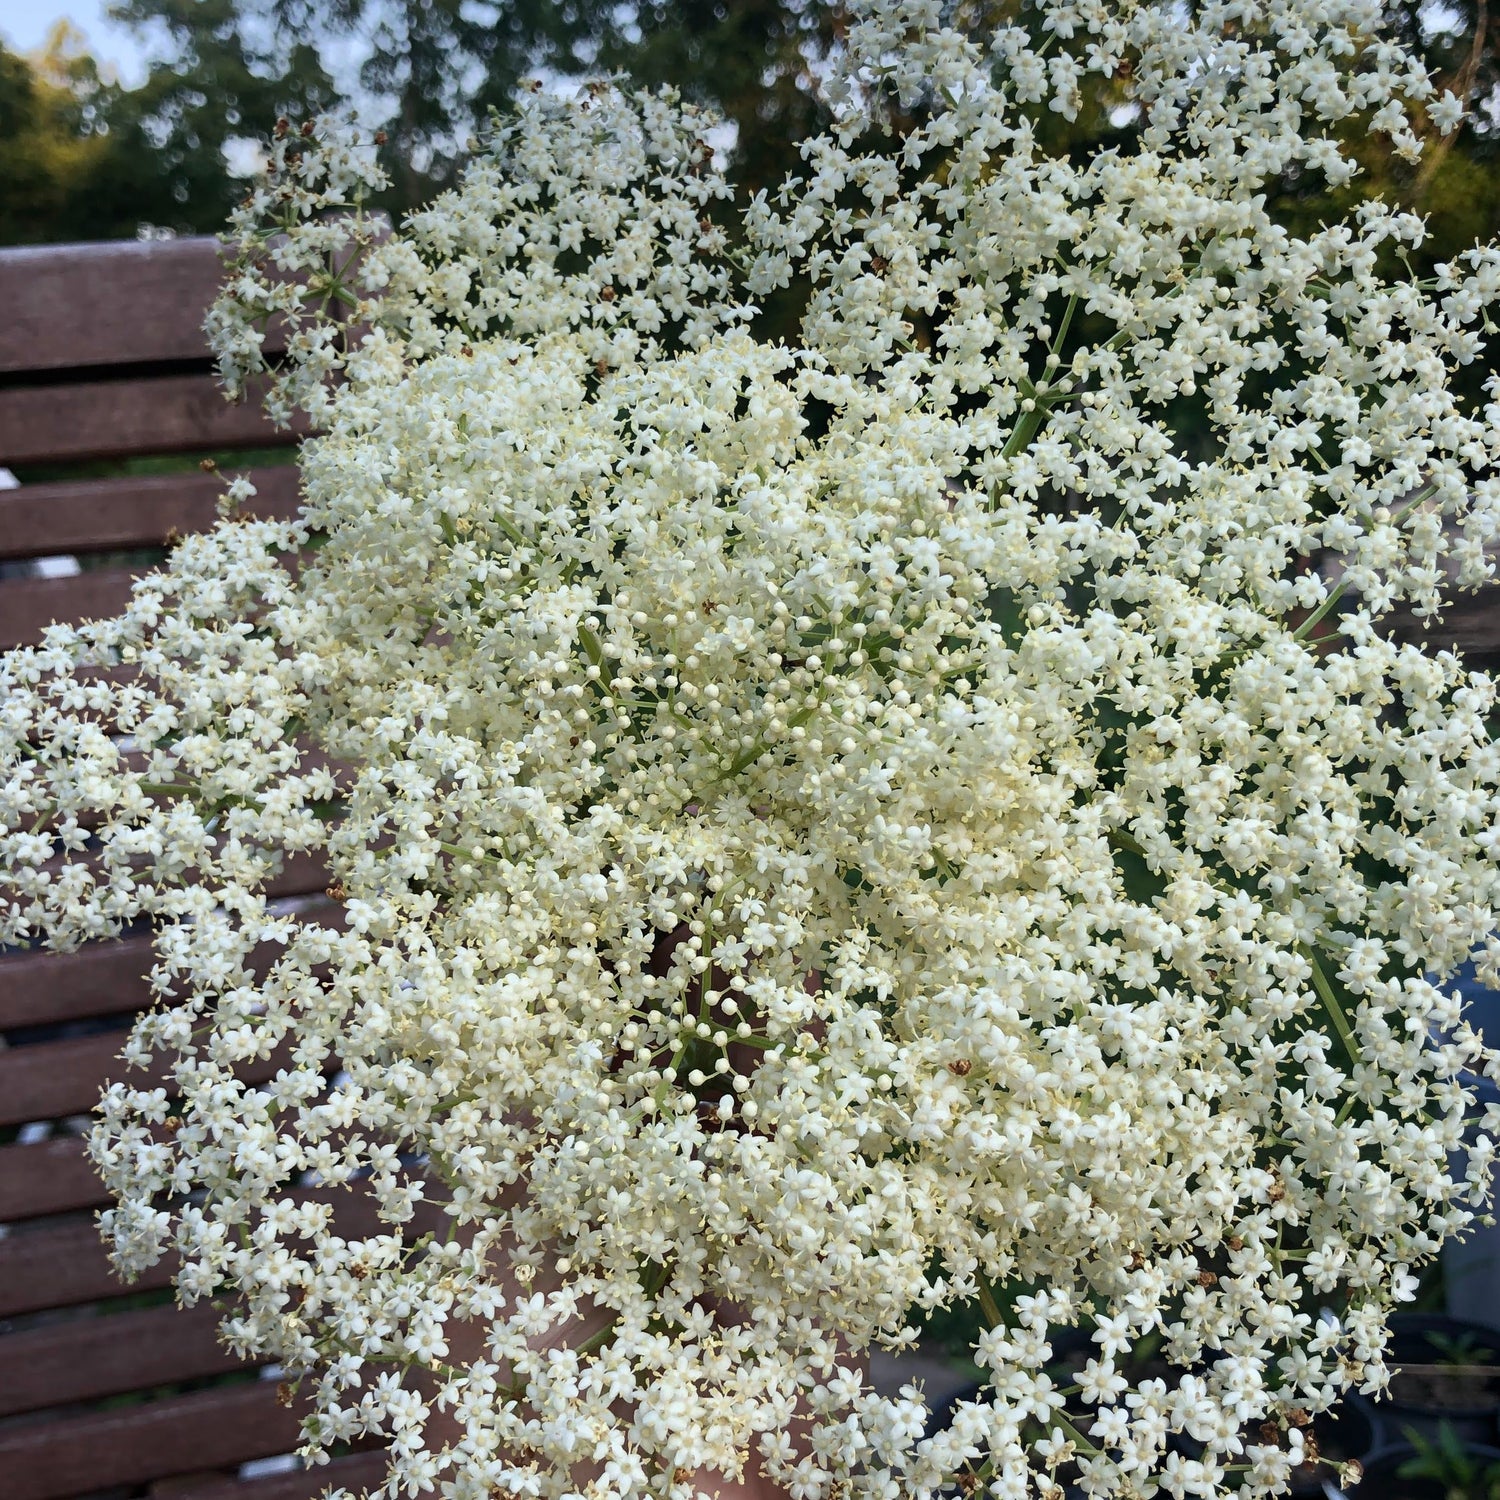 Giant cluster of white, lacy elderflowers